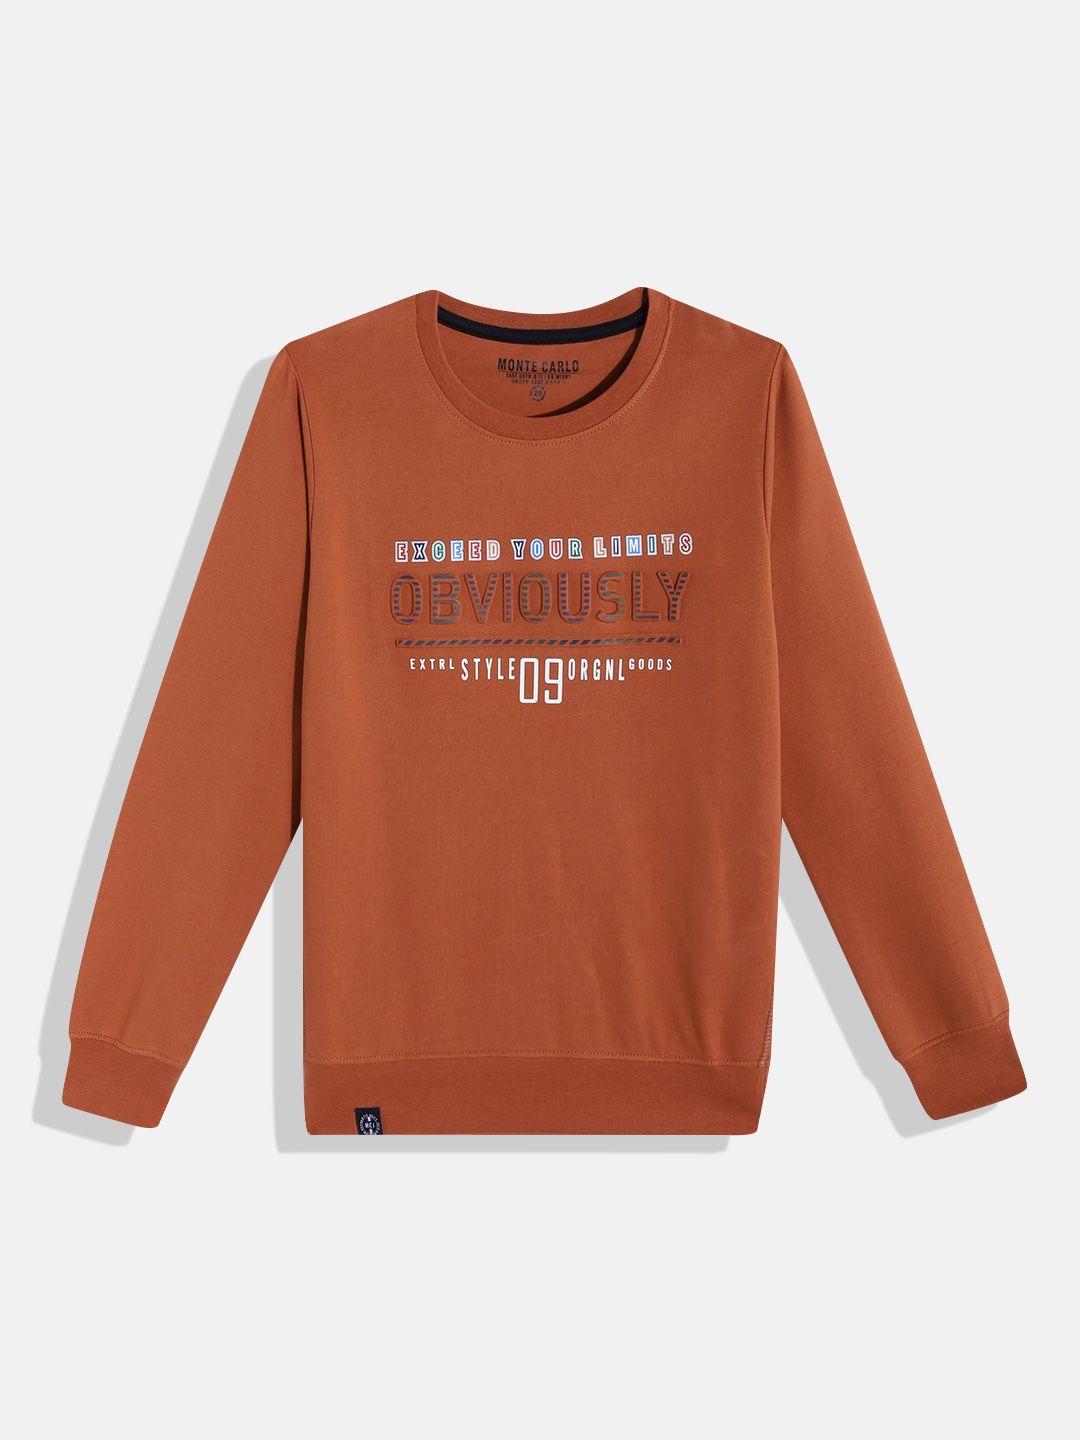 monte carlo boys rust orange & white printed sweatshirt